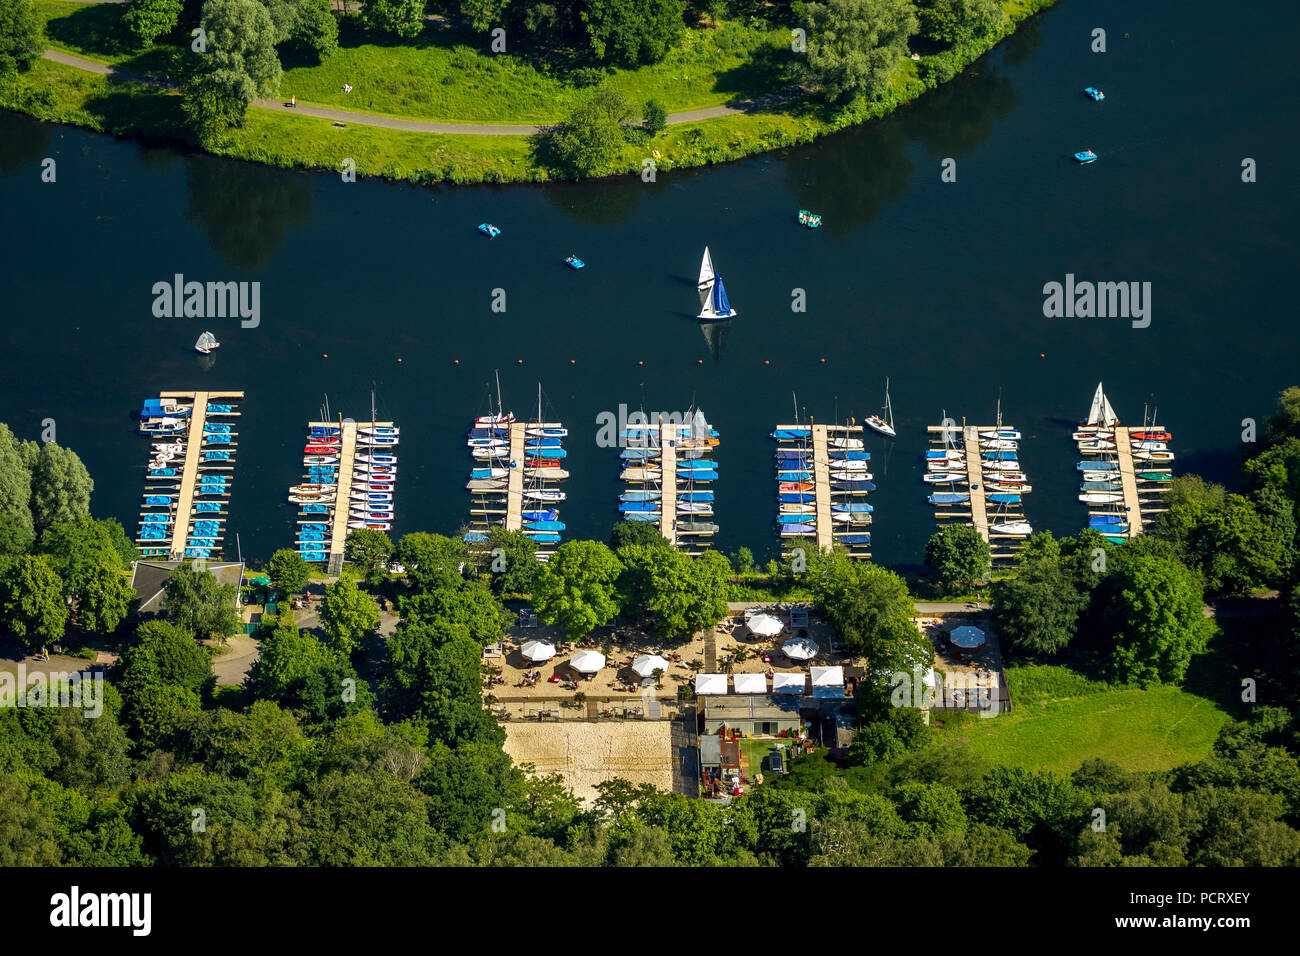 Sailboat wharf at Kemnader lake, Kemnader reservoir, Bochum, Ruhr area, North Rhine-Westphalia, Germany Stock Photo